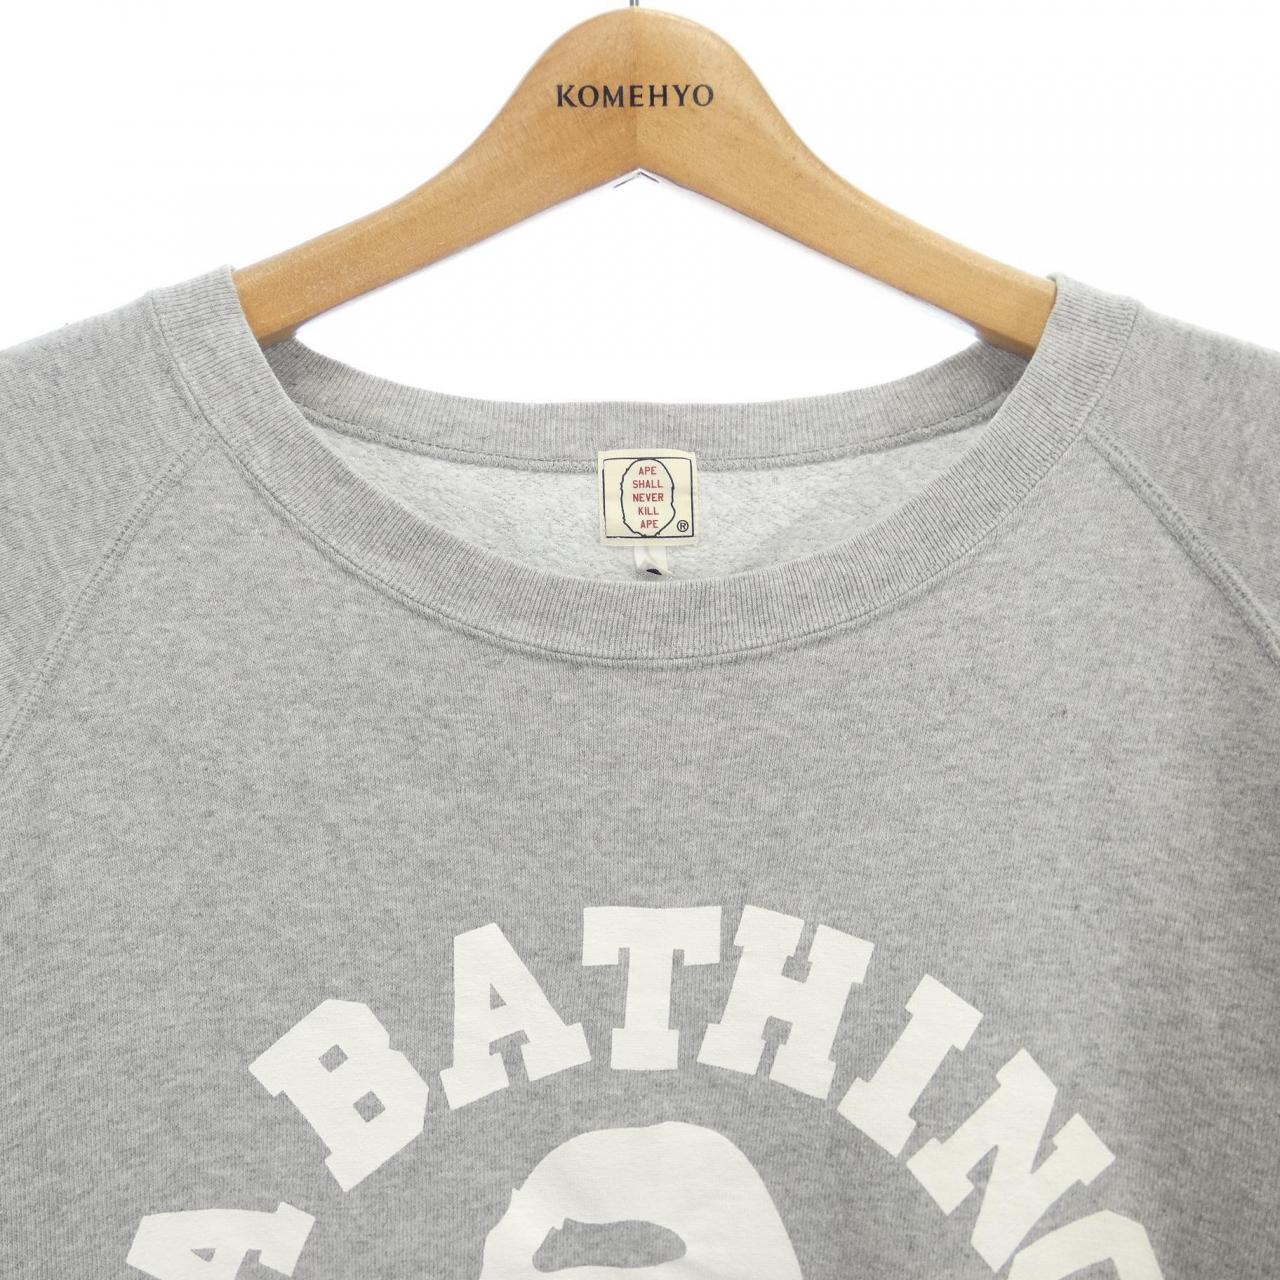 A Bathing Ape Sweatshirt